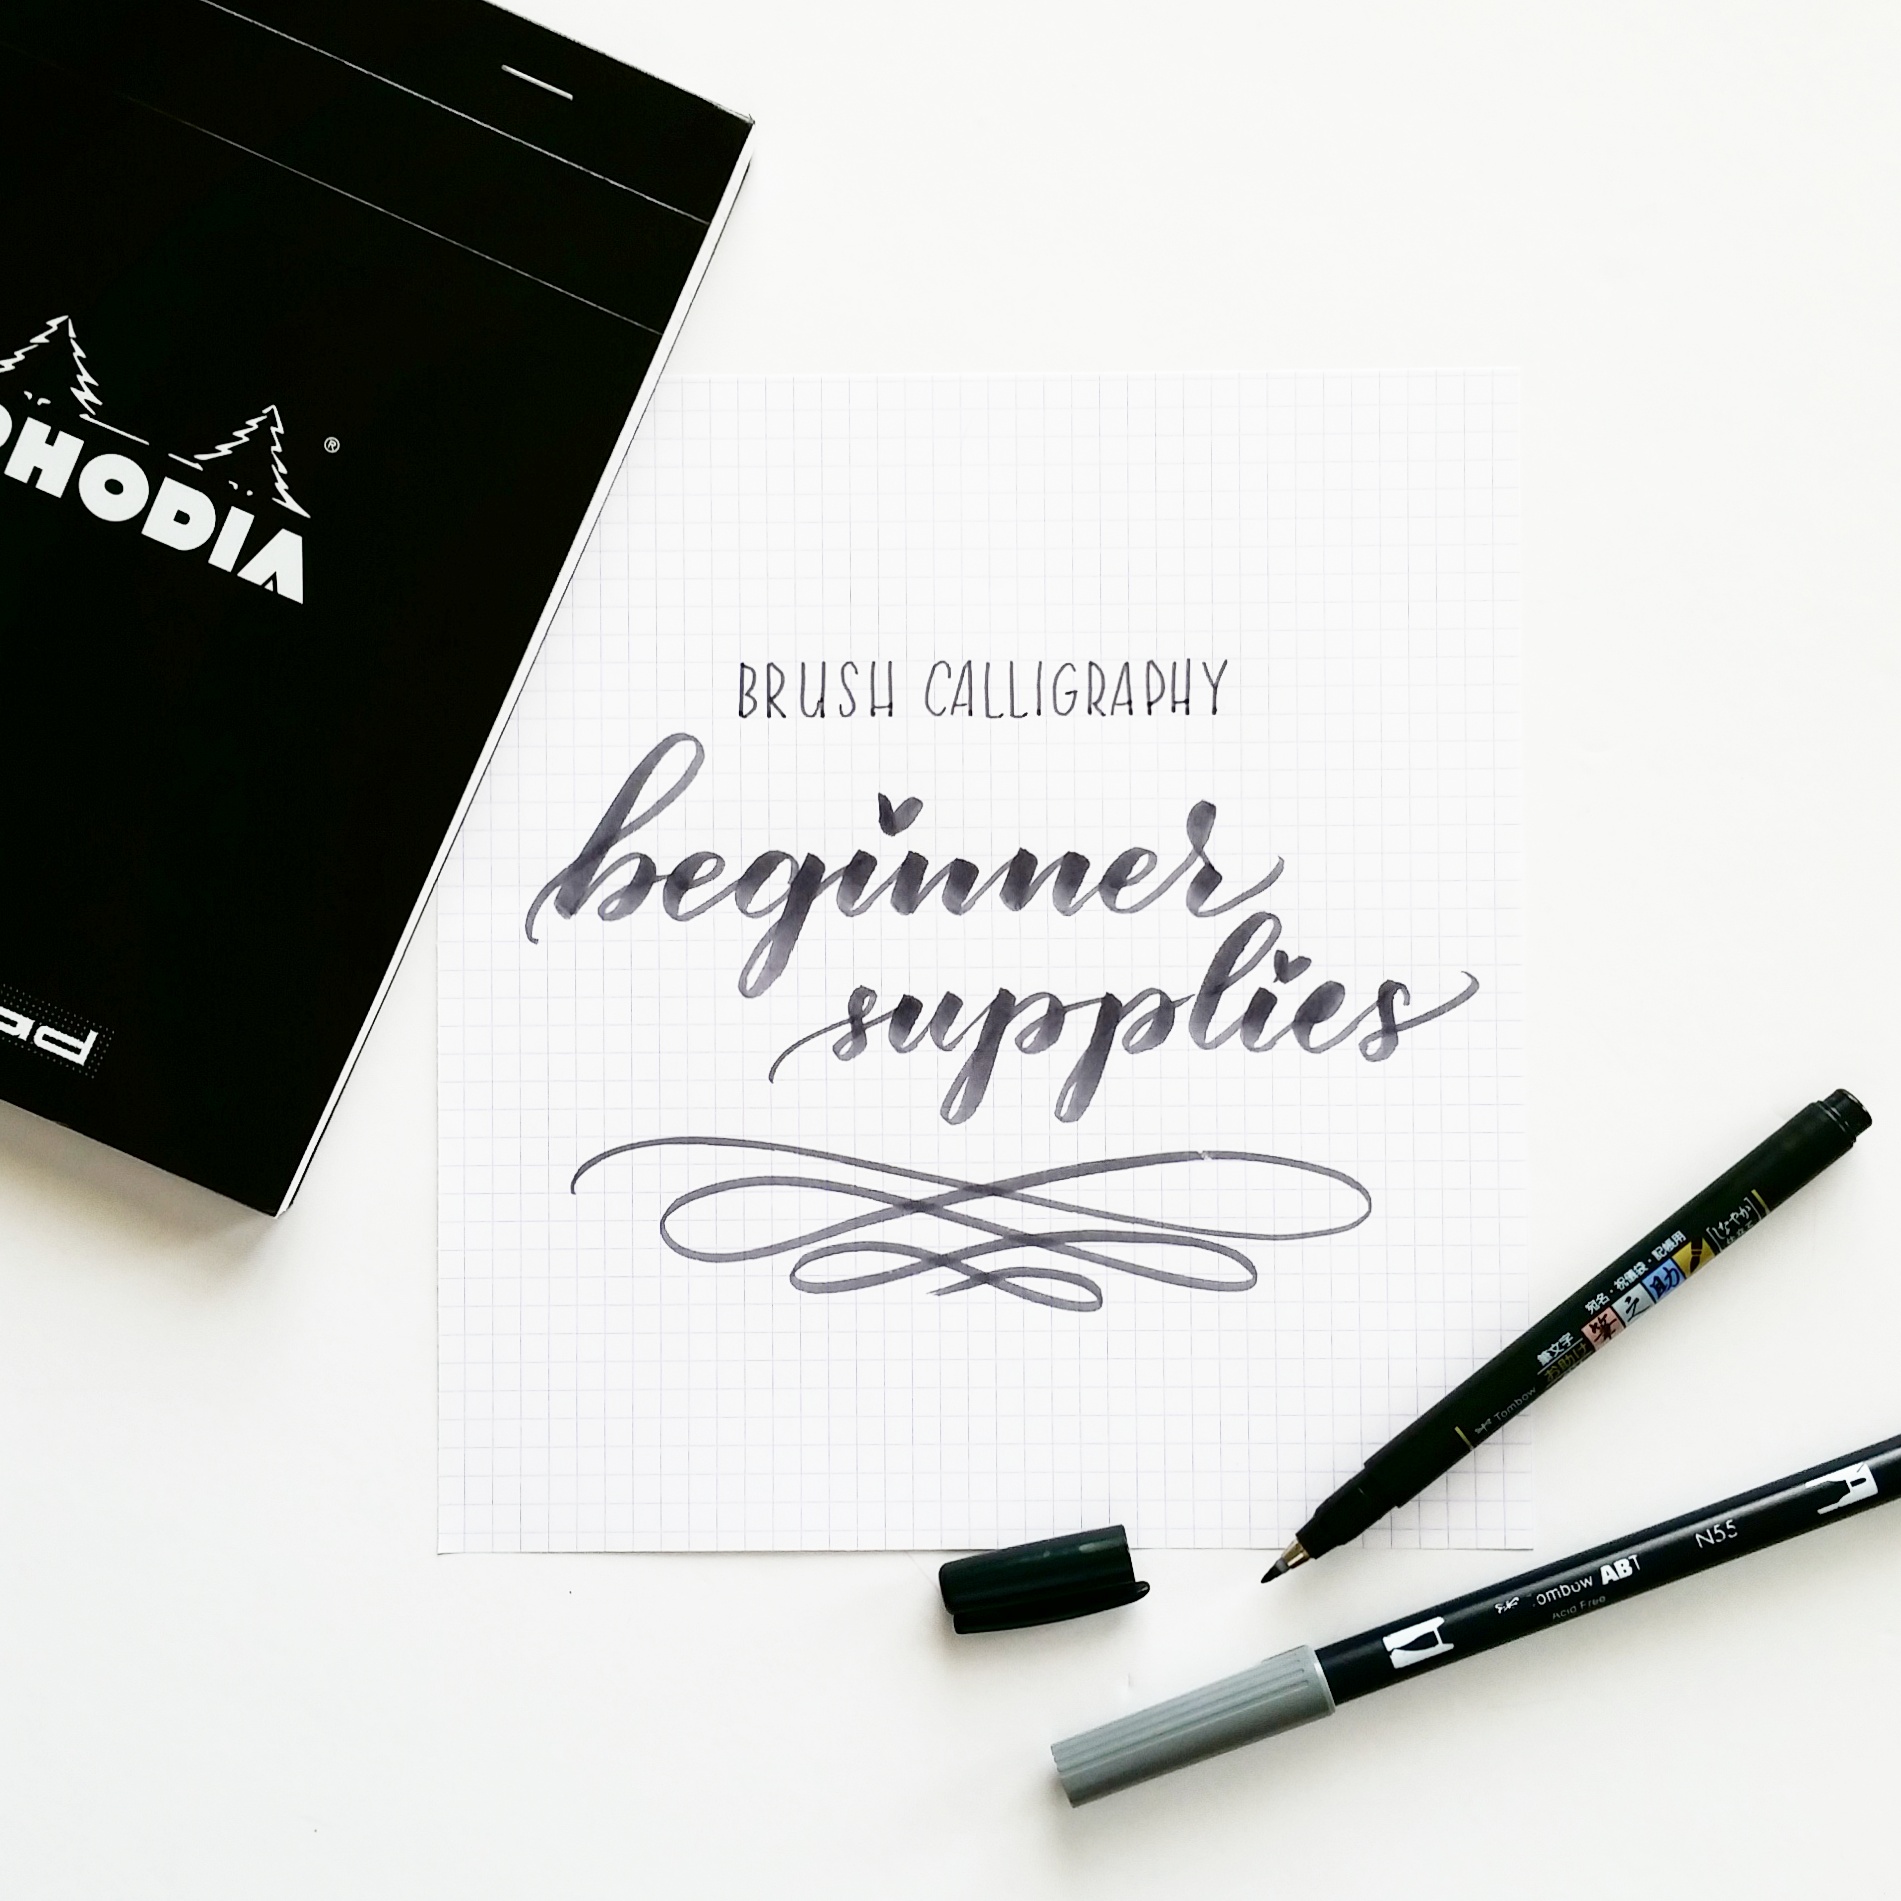 Beginner supplies for brush calligraphy